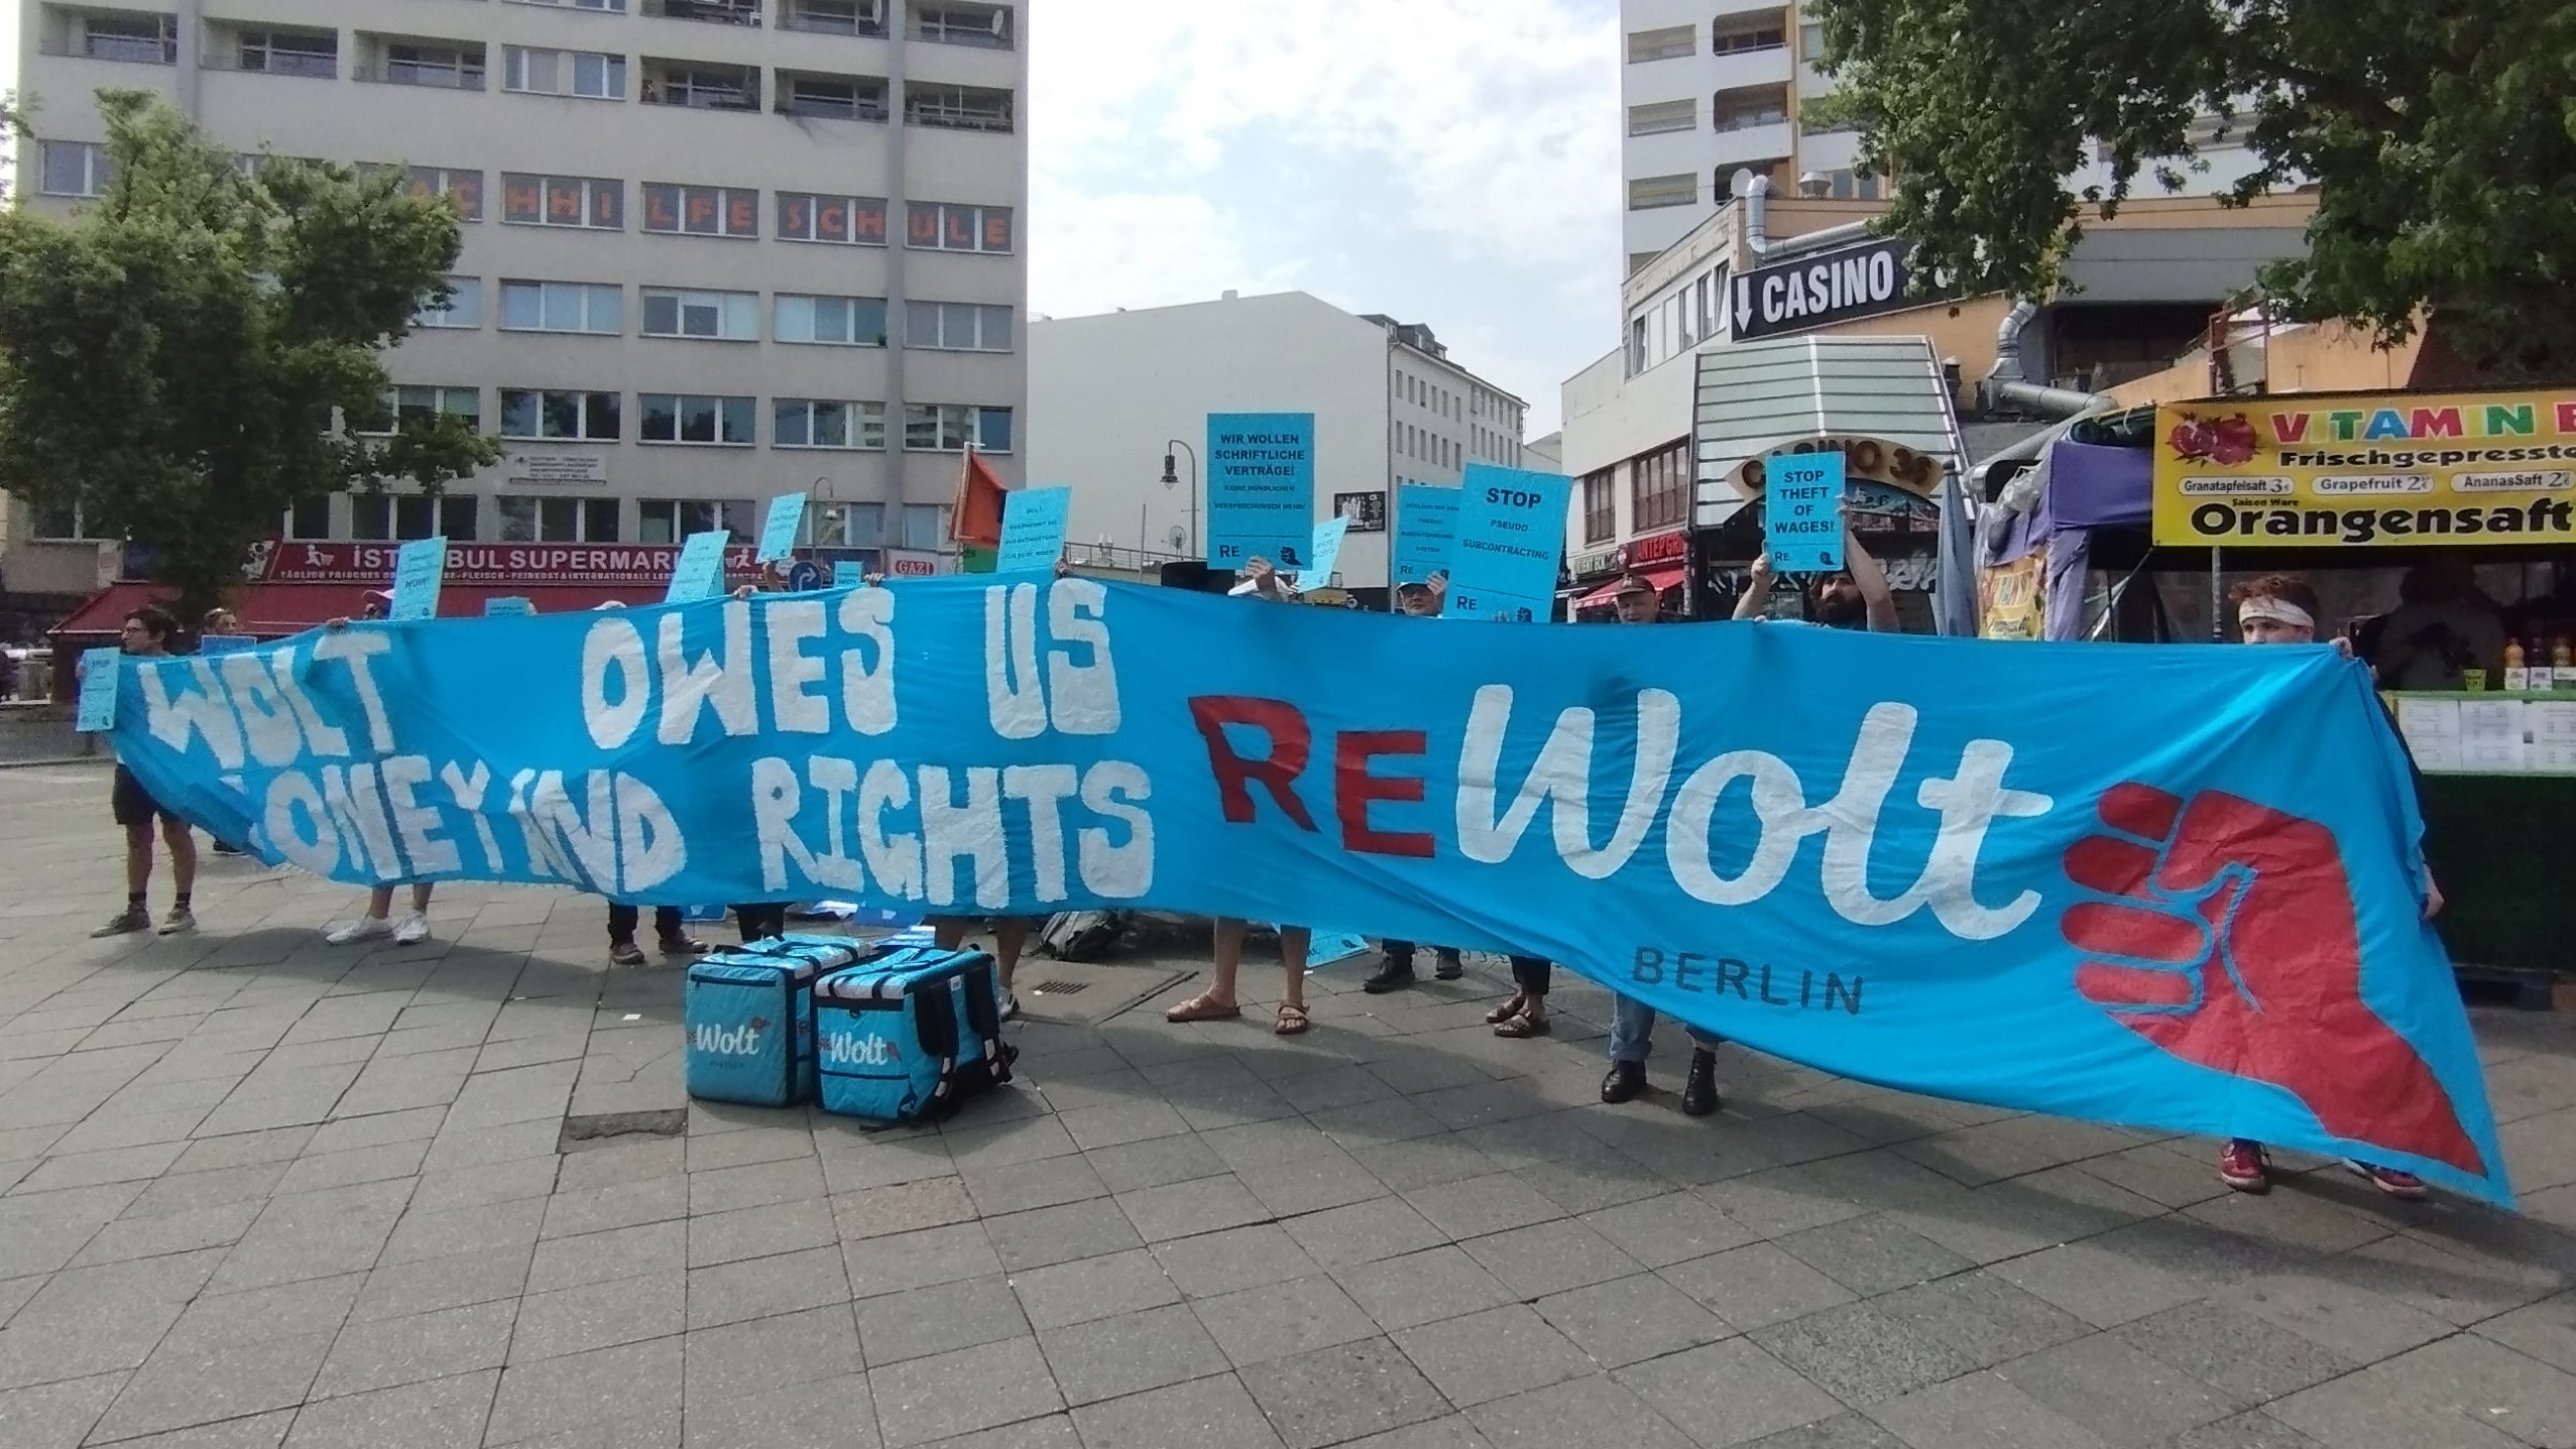 ReWolt-Protestierer in Berlin (Foto: Minerwa Tahir)